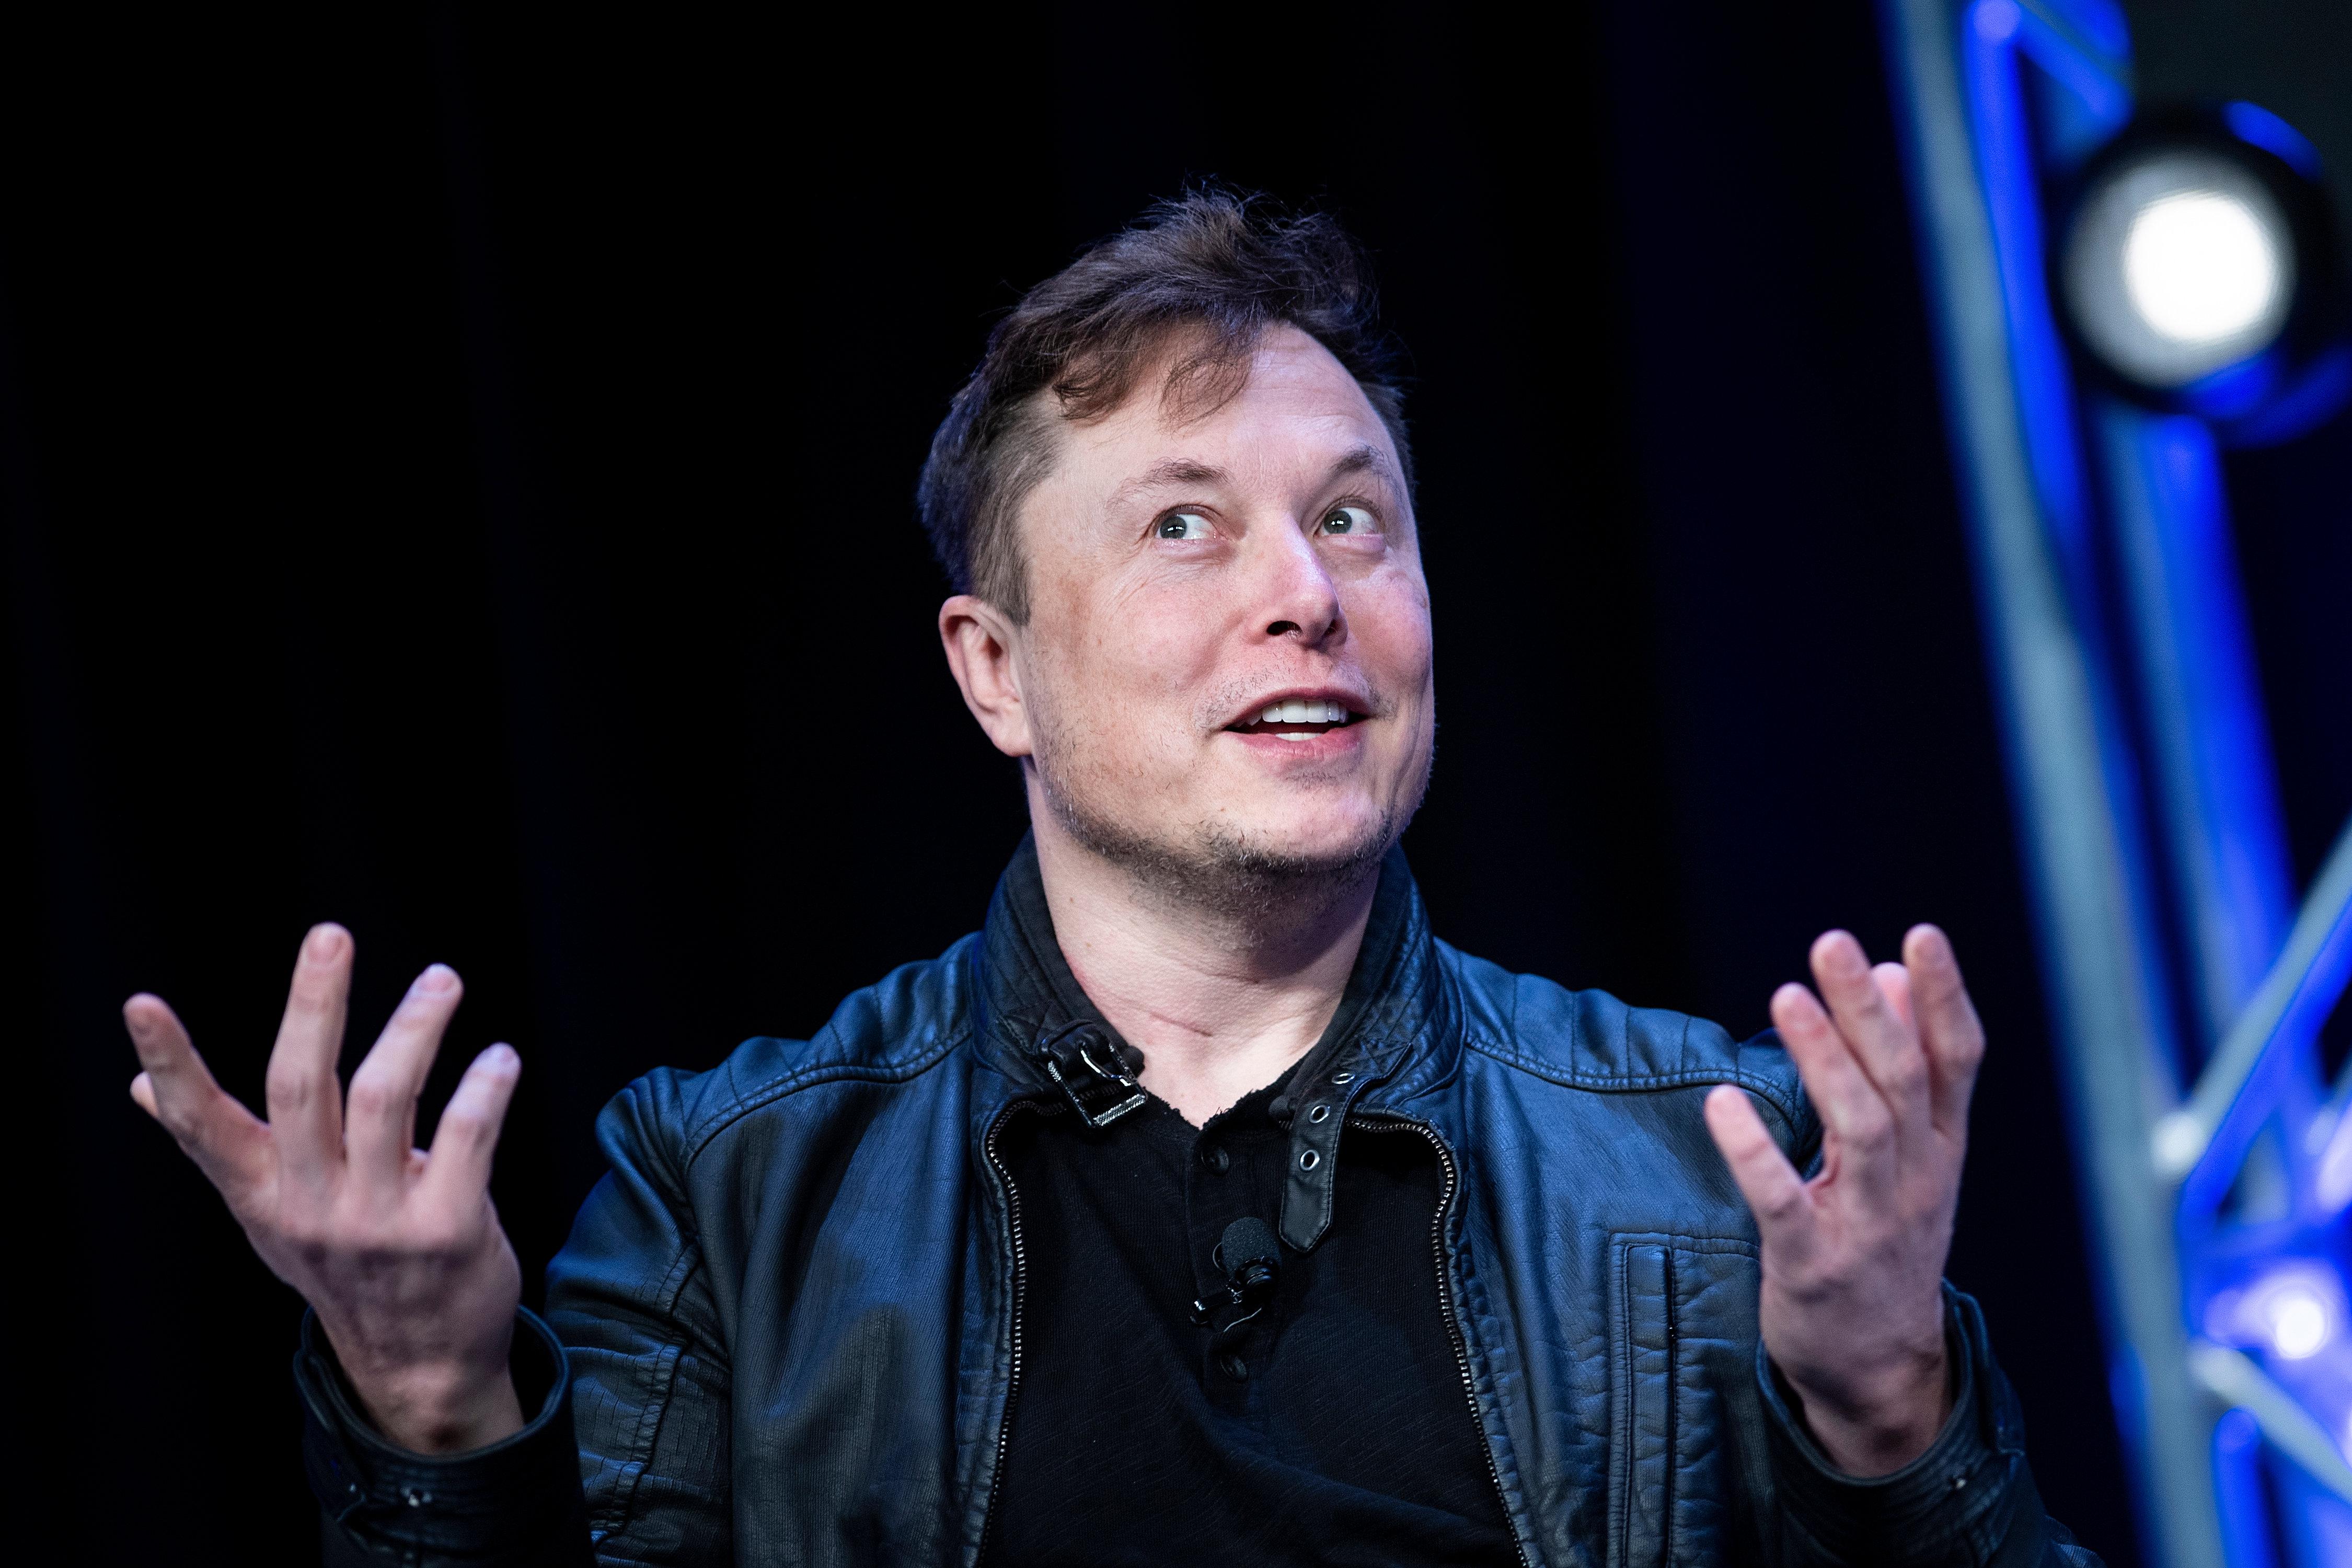 Elon Musk raises both hands and looks askance.